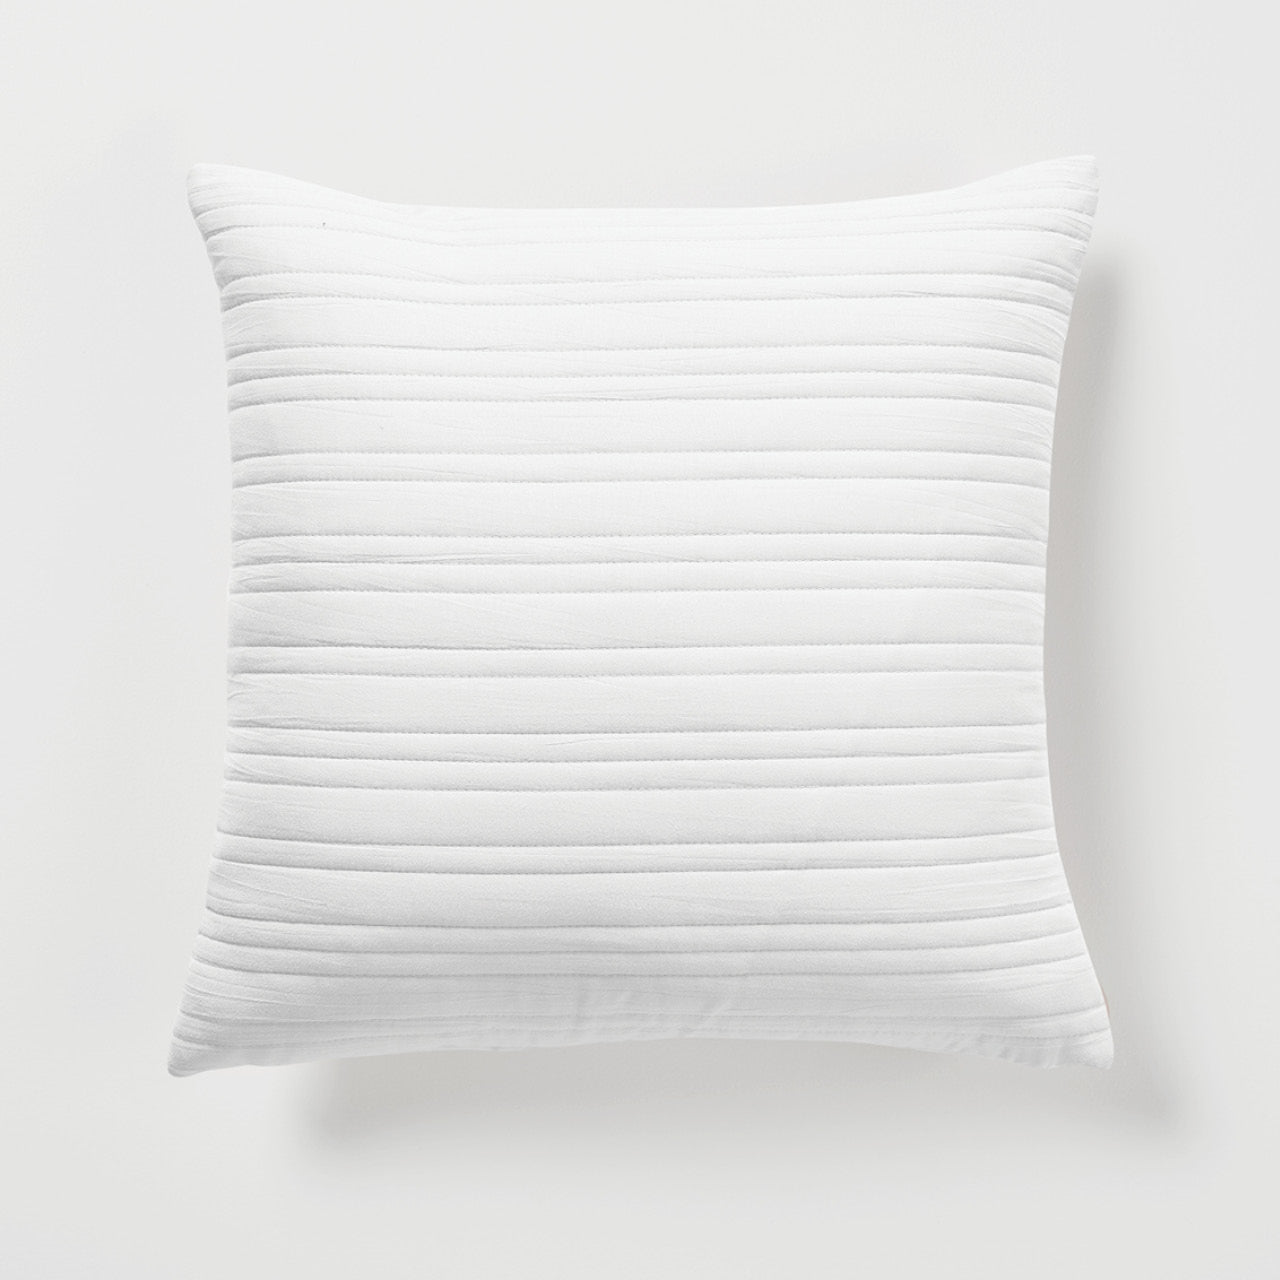 Taya White Cushion Cover on a white background